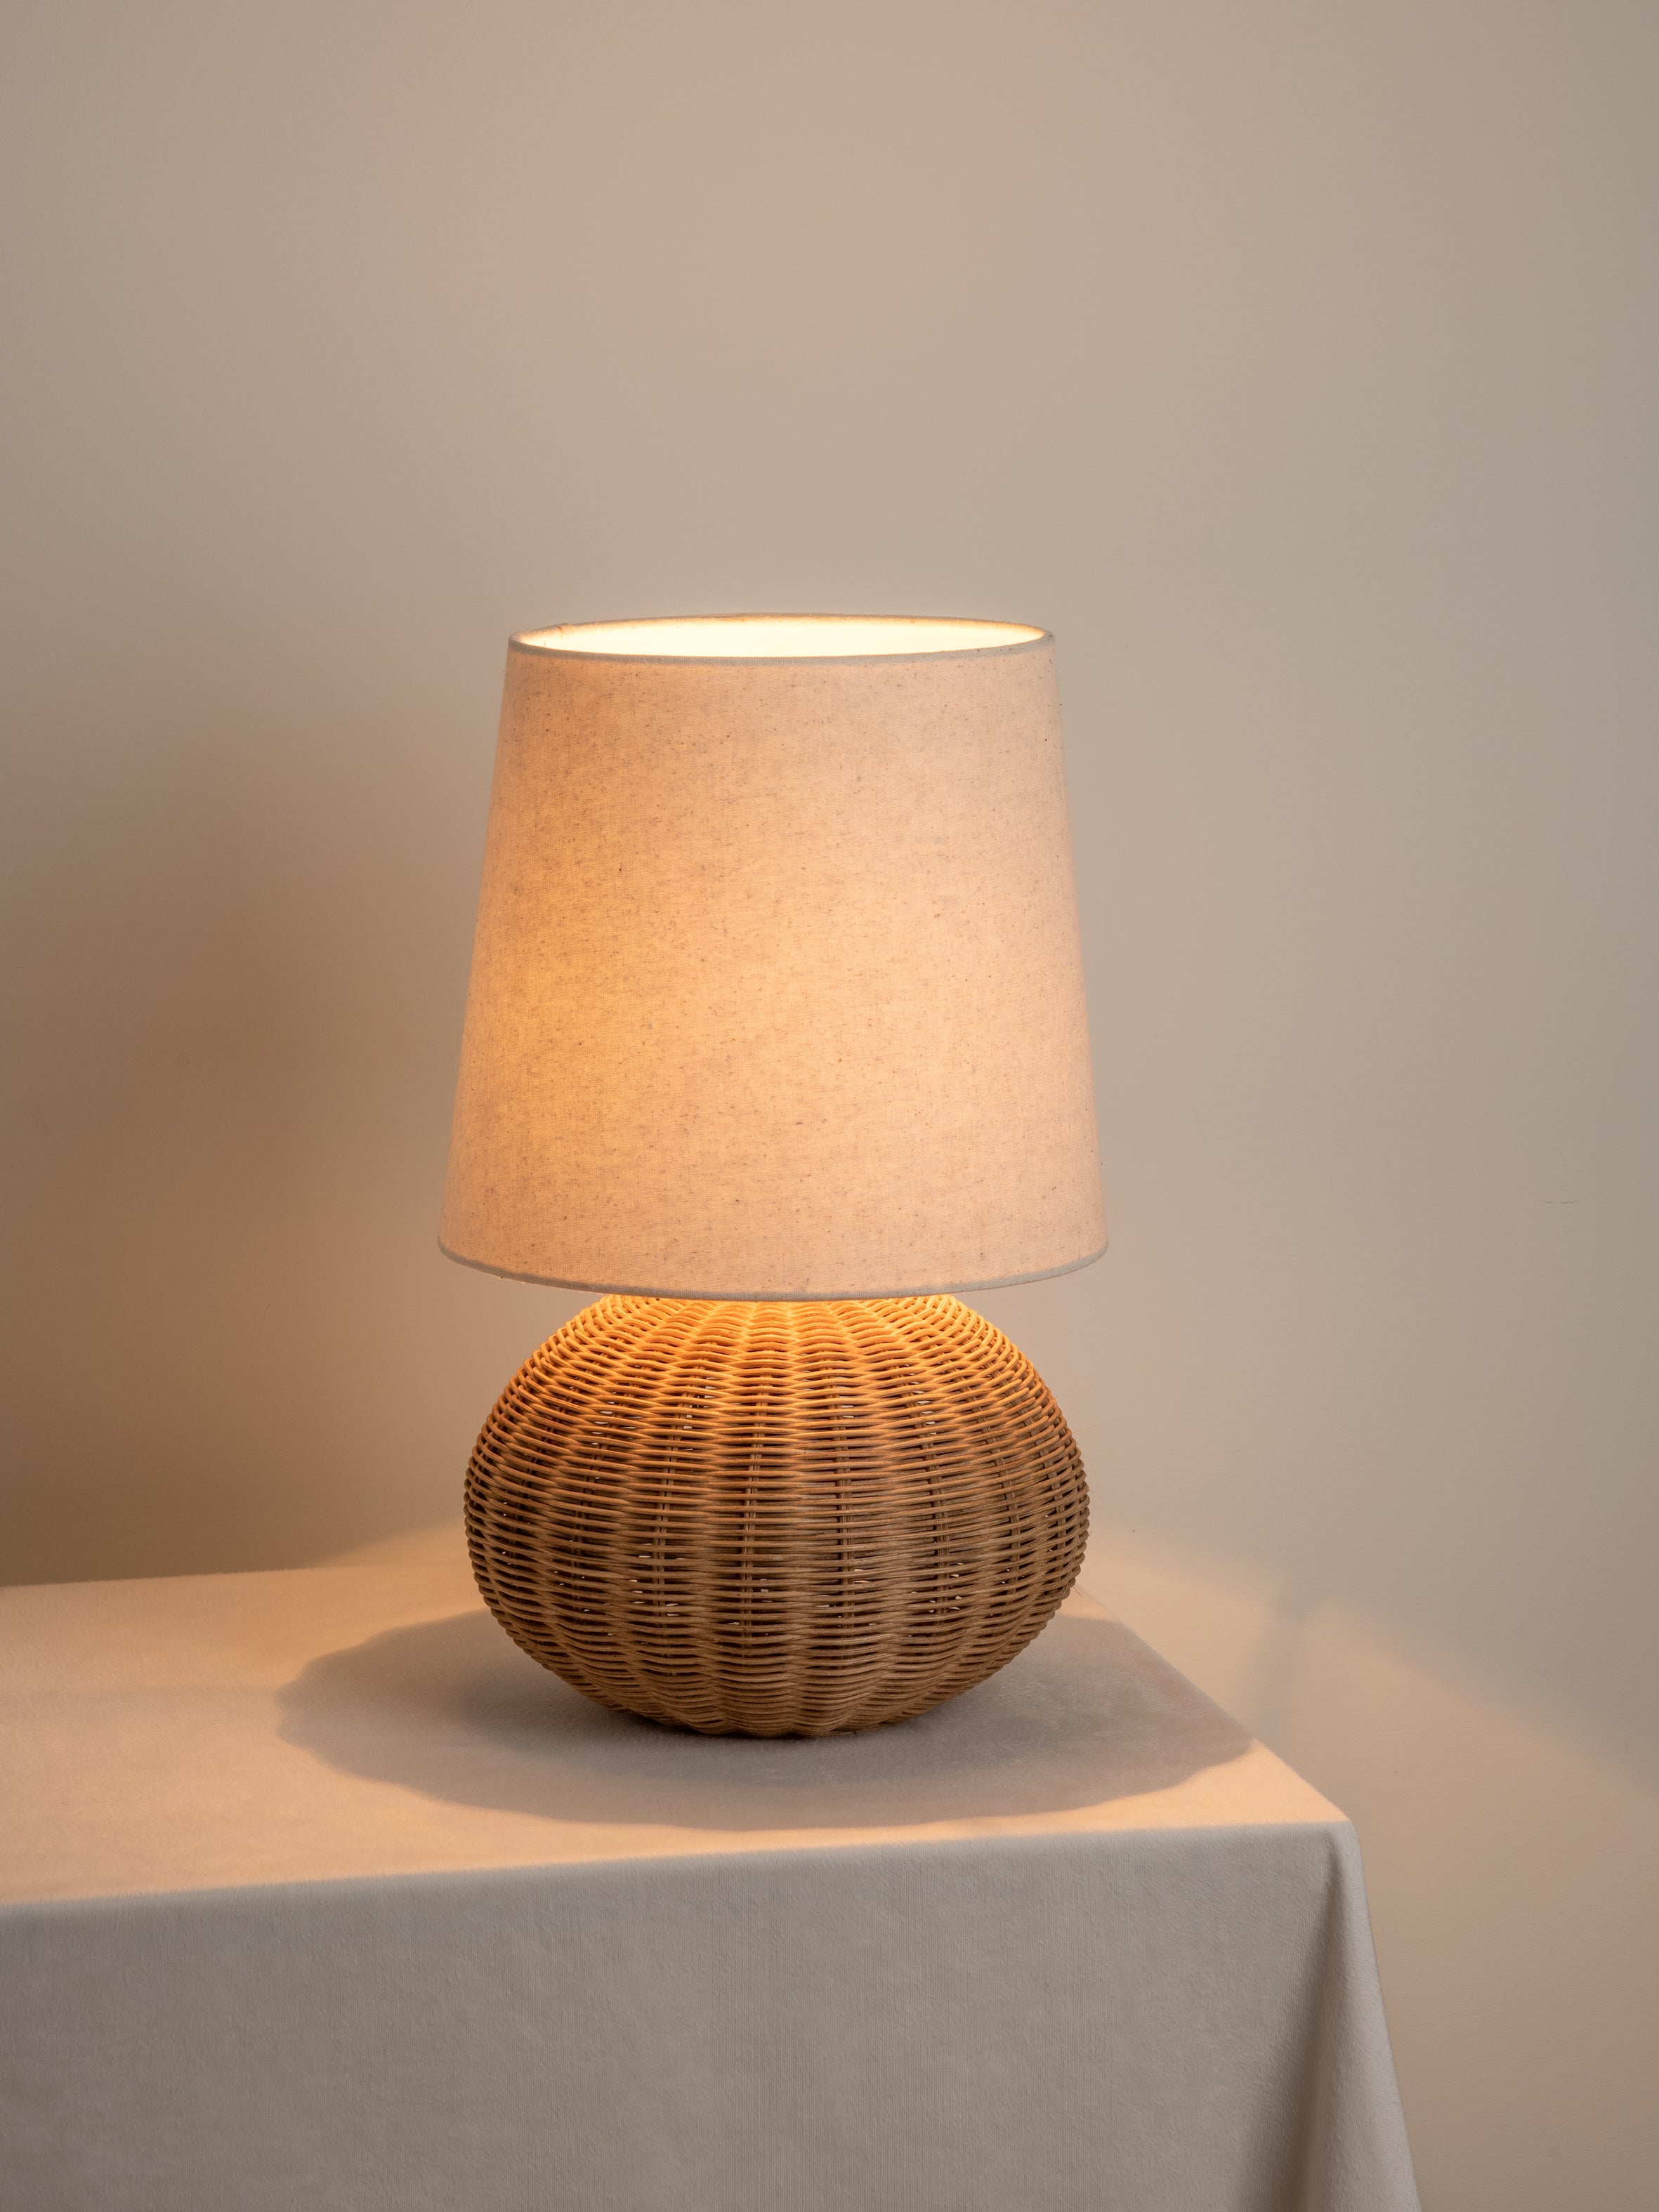 Sanvi - rattan globe table lamp | Table Lamp | Lights & Lamps Inc | Modern Affordable Designer Lighting | USA